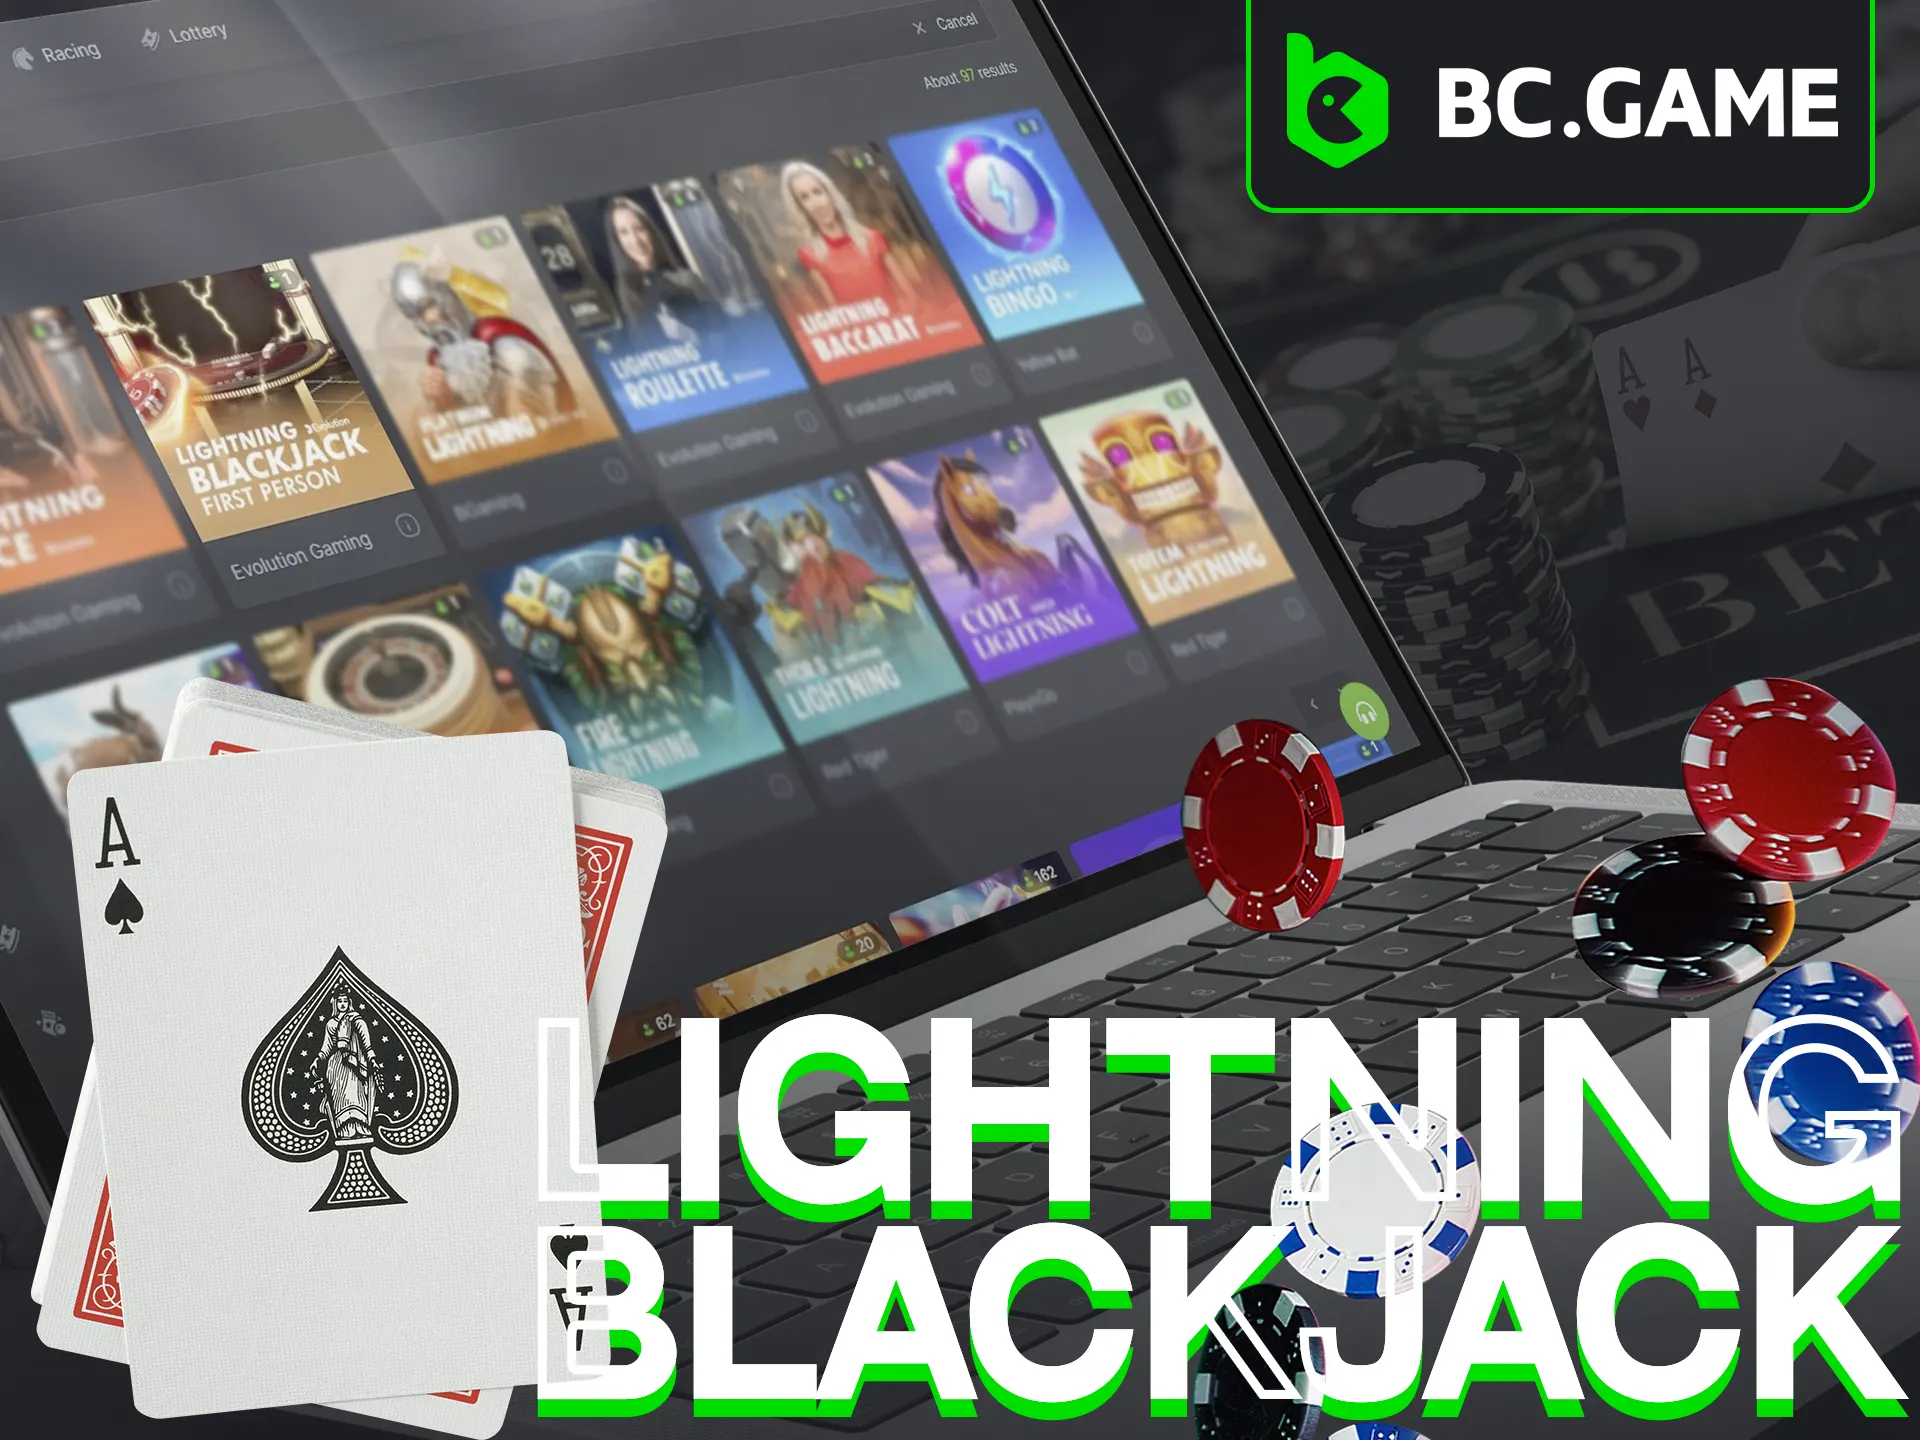 Experience Lightning Blackjack, with random multipliers for big winnings.